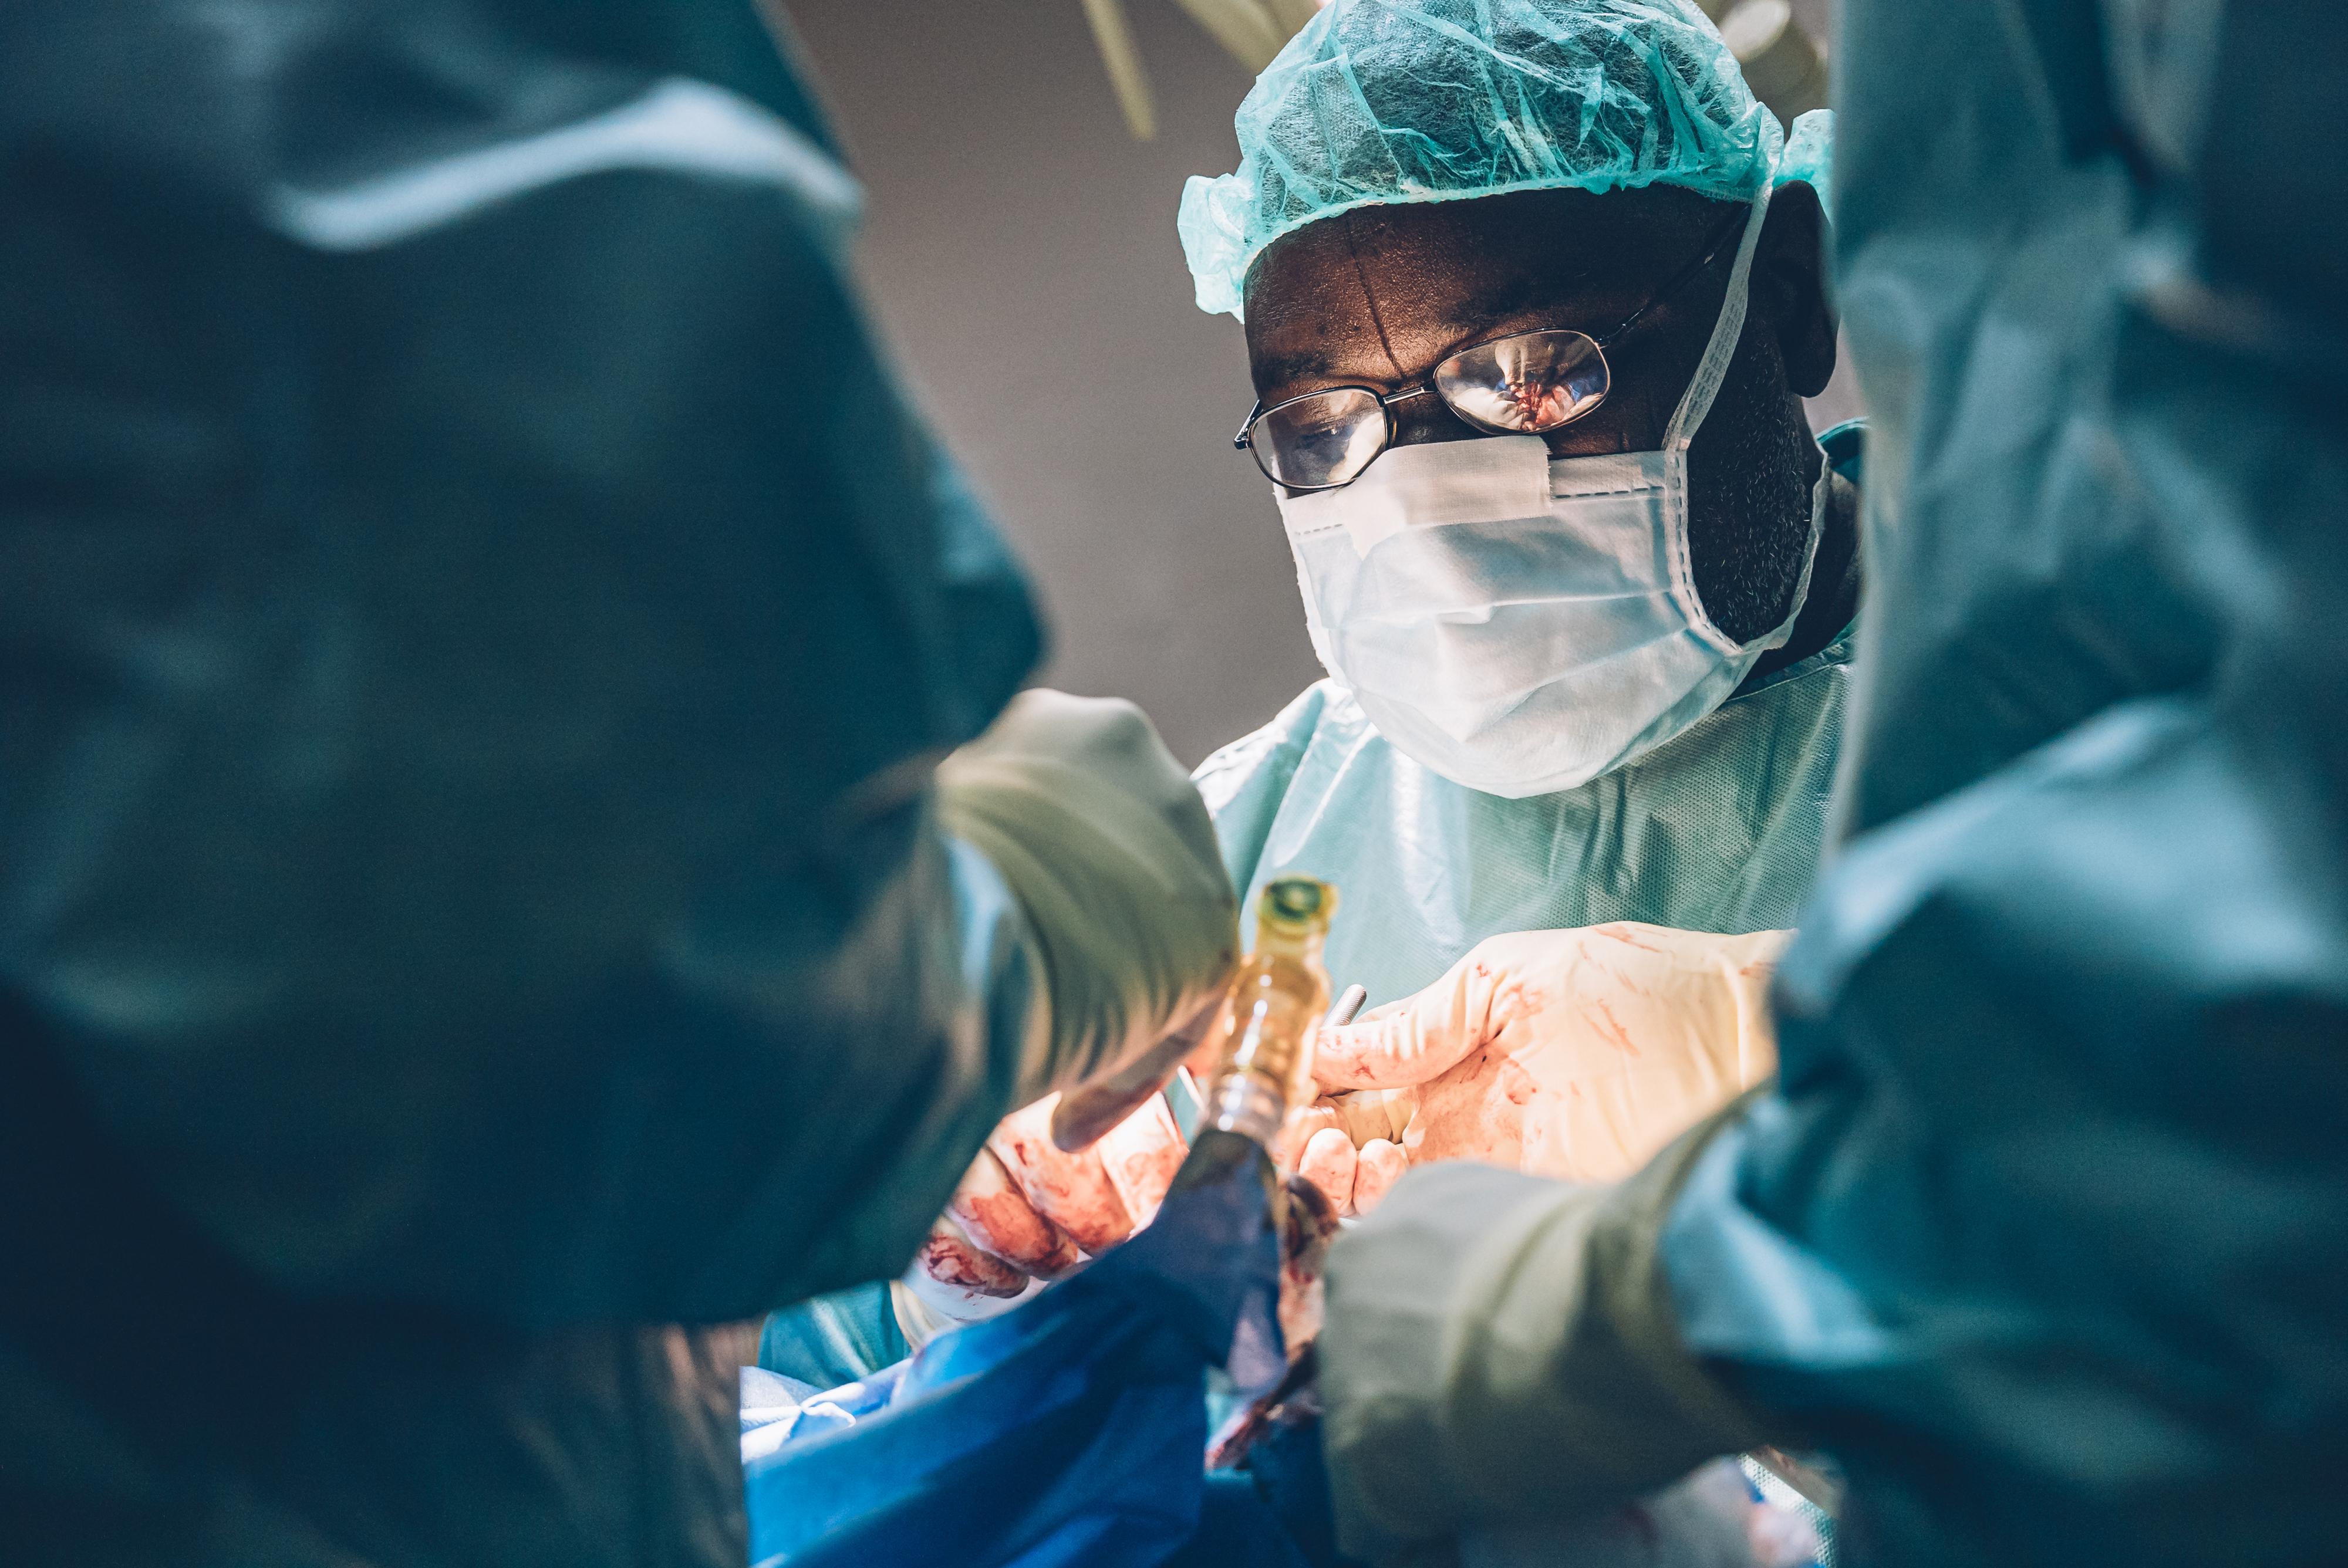 Dr Muhammad Abubakar Lawal, plastic surgeon, is operating at the Noma Hospital in Sokoto, Nigeria. 